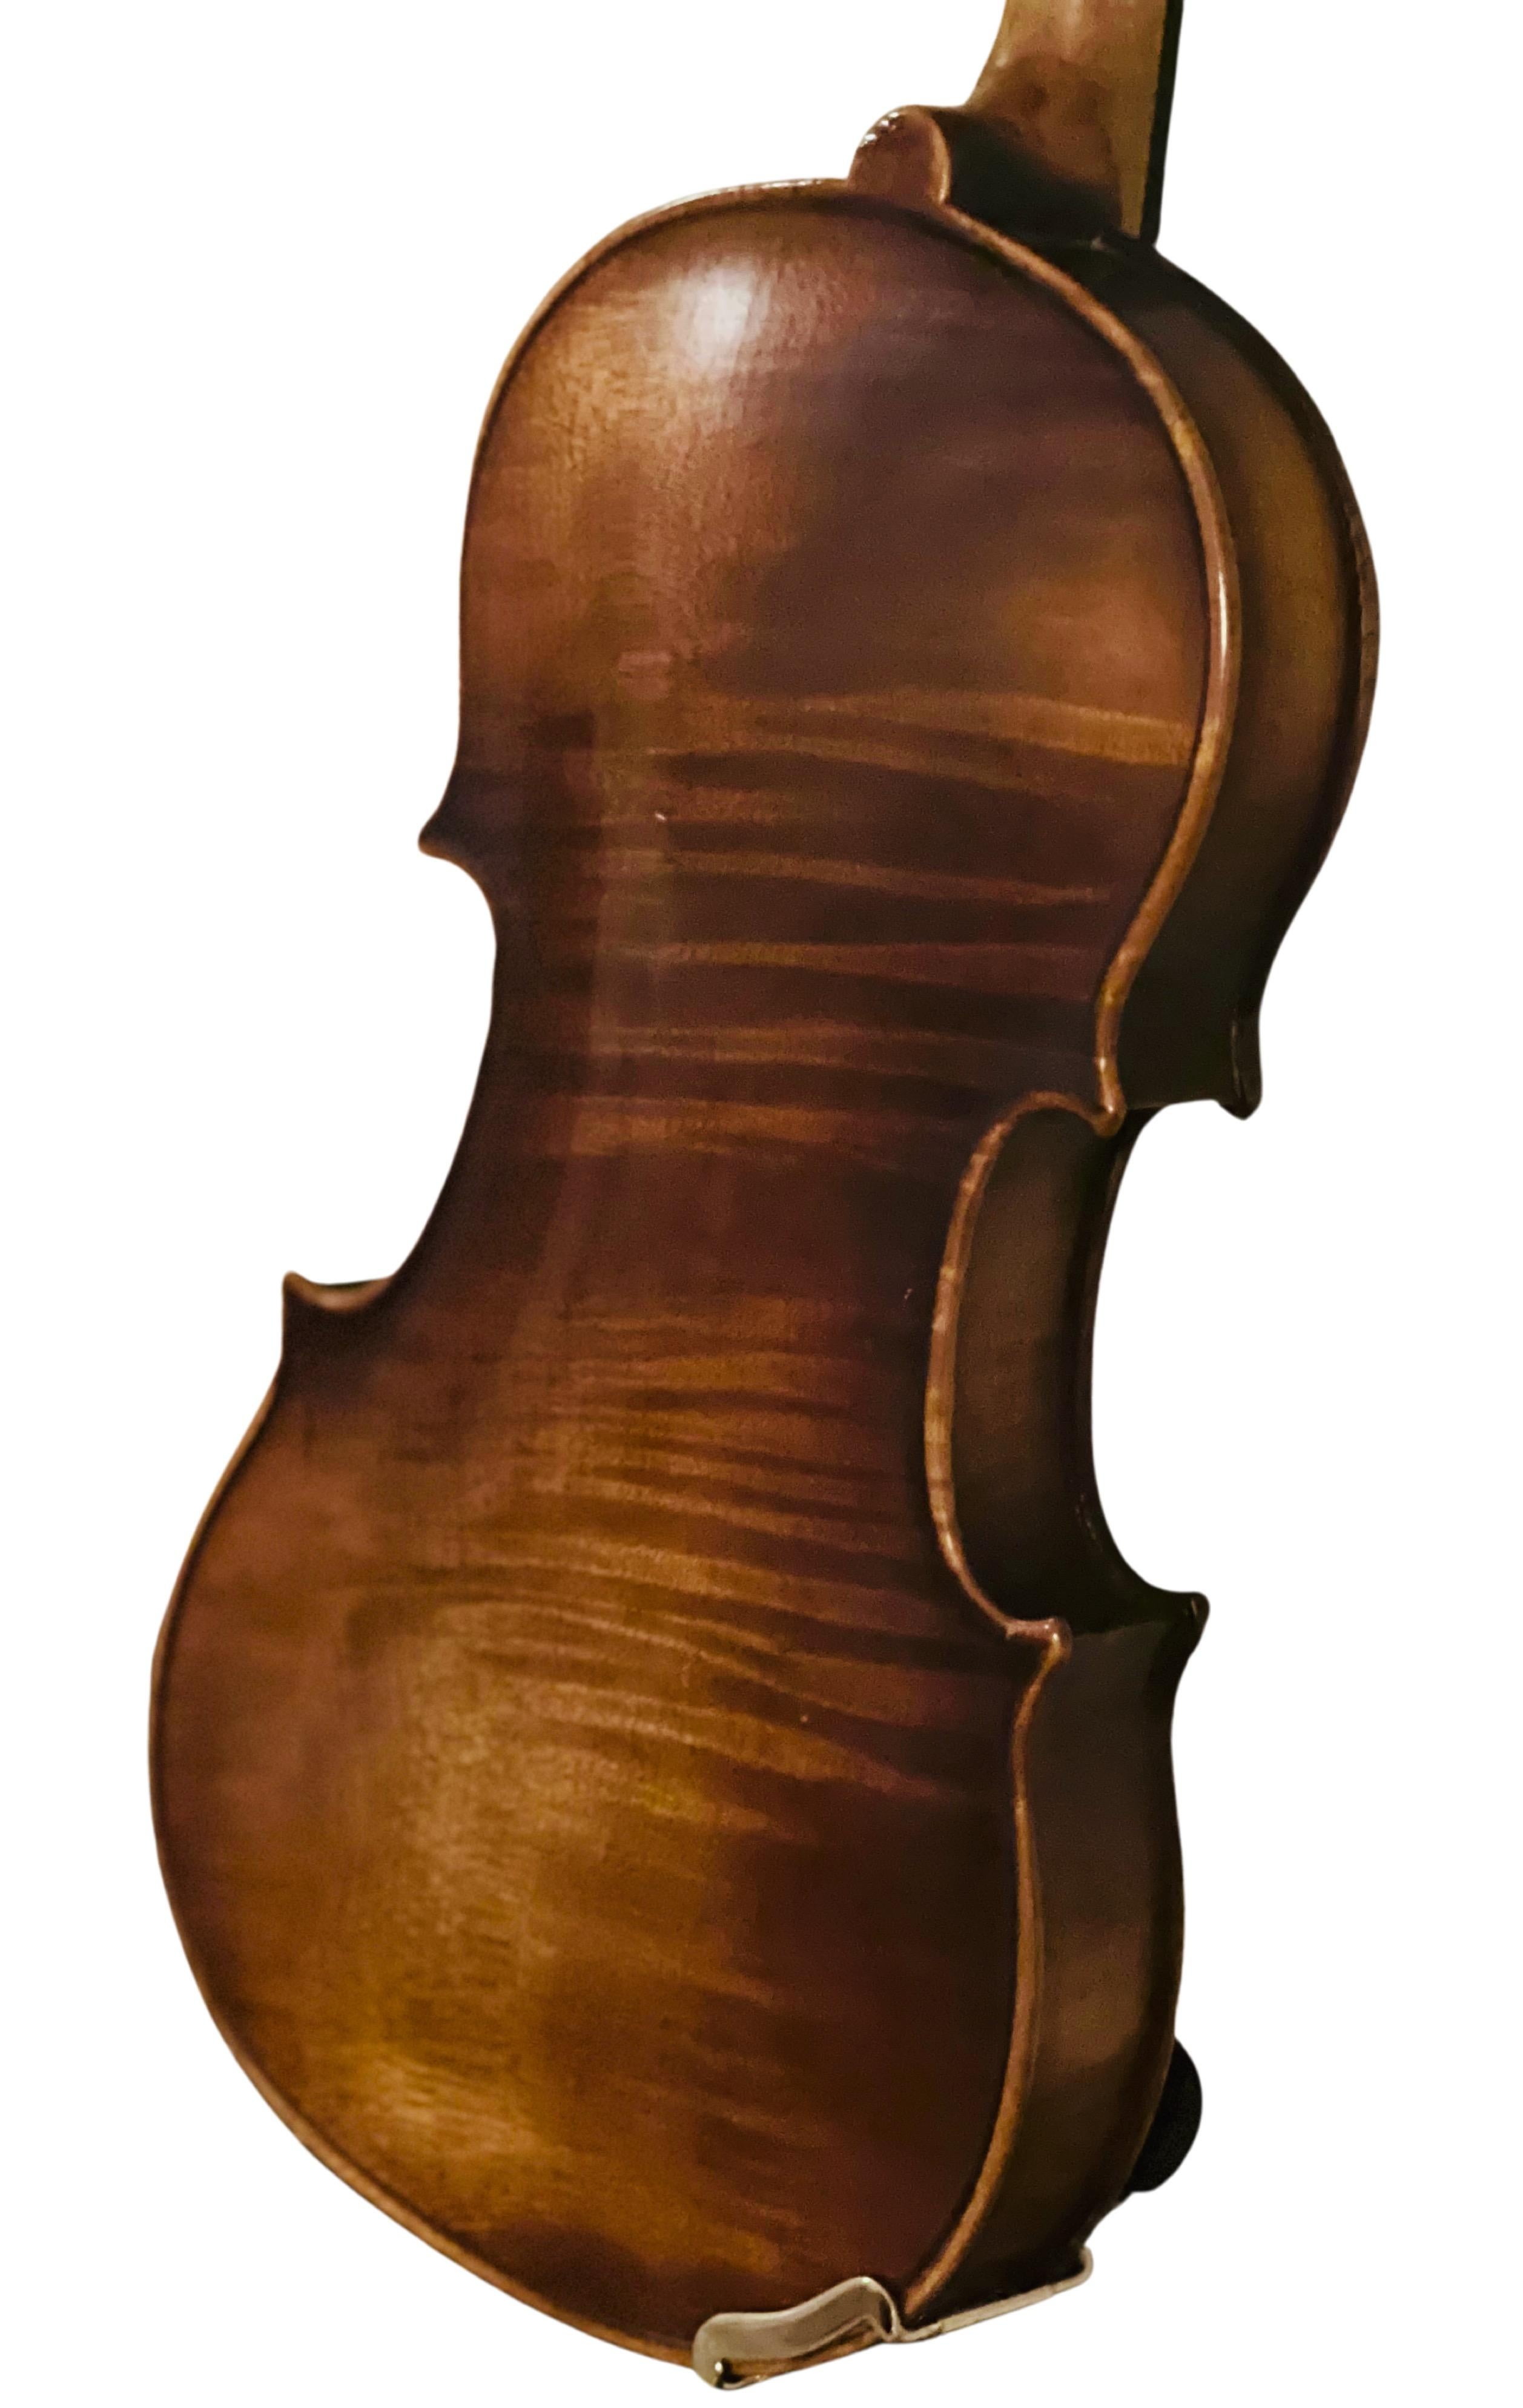 1970 3/4 E.R. Pfretzschner Hand-Crafted Violin in the Style of A. Stradivarius Bon état - En vente à Doylestown, PA